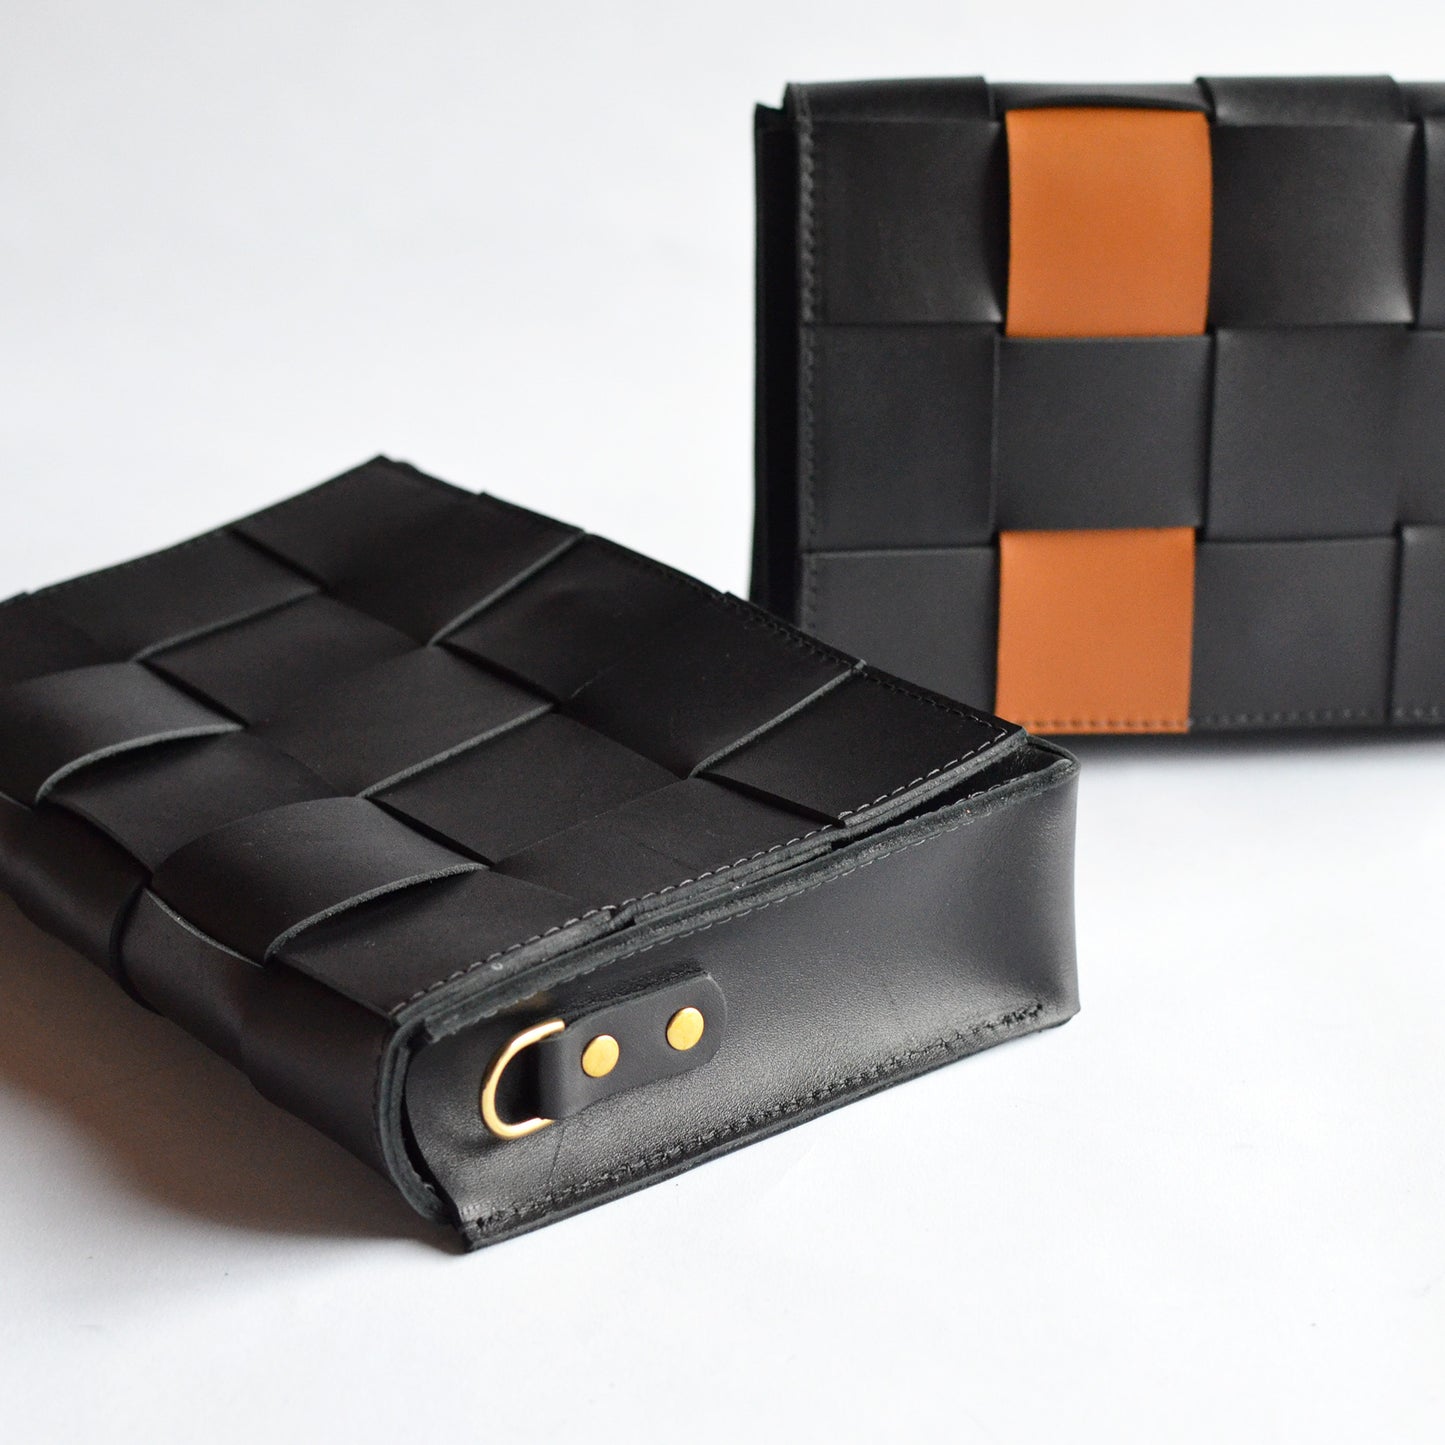 Woven Clutch + Crossbody Bag - Black Leather